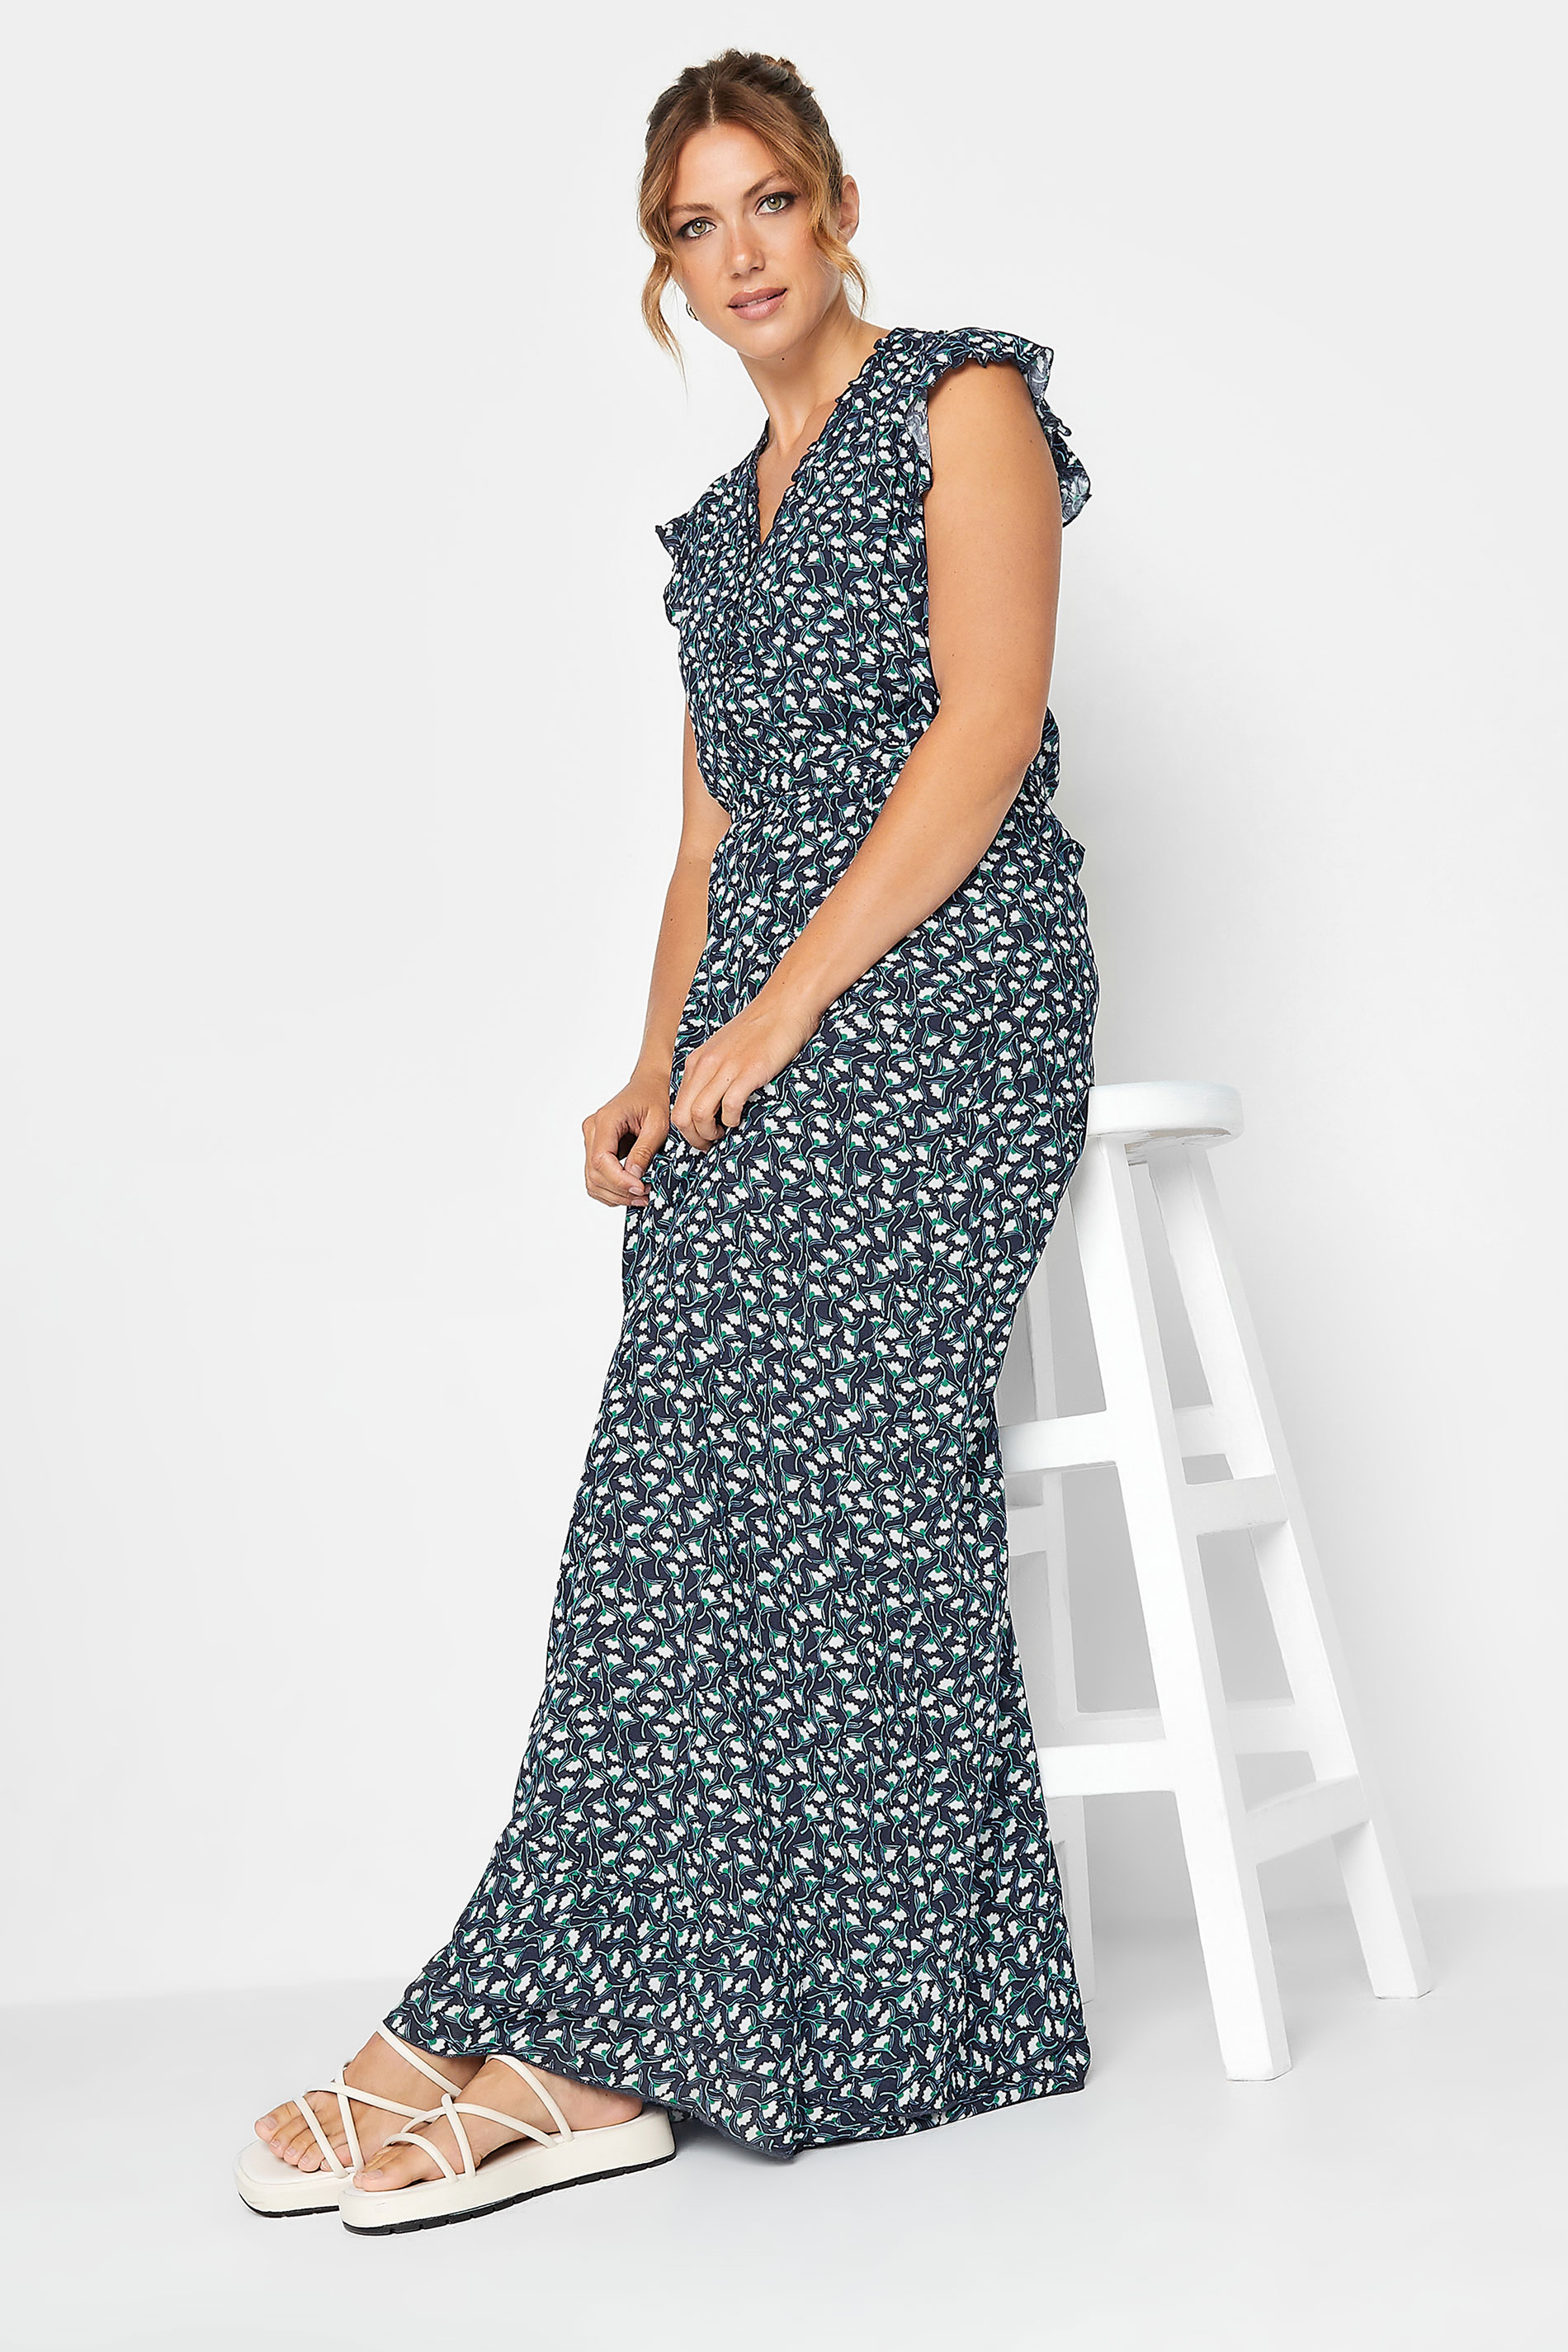 LTS Tall Women's Navy Blue Daisy Print Frill Maxi Dress | Long Tall Sally 1